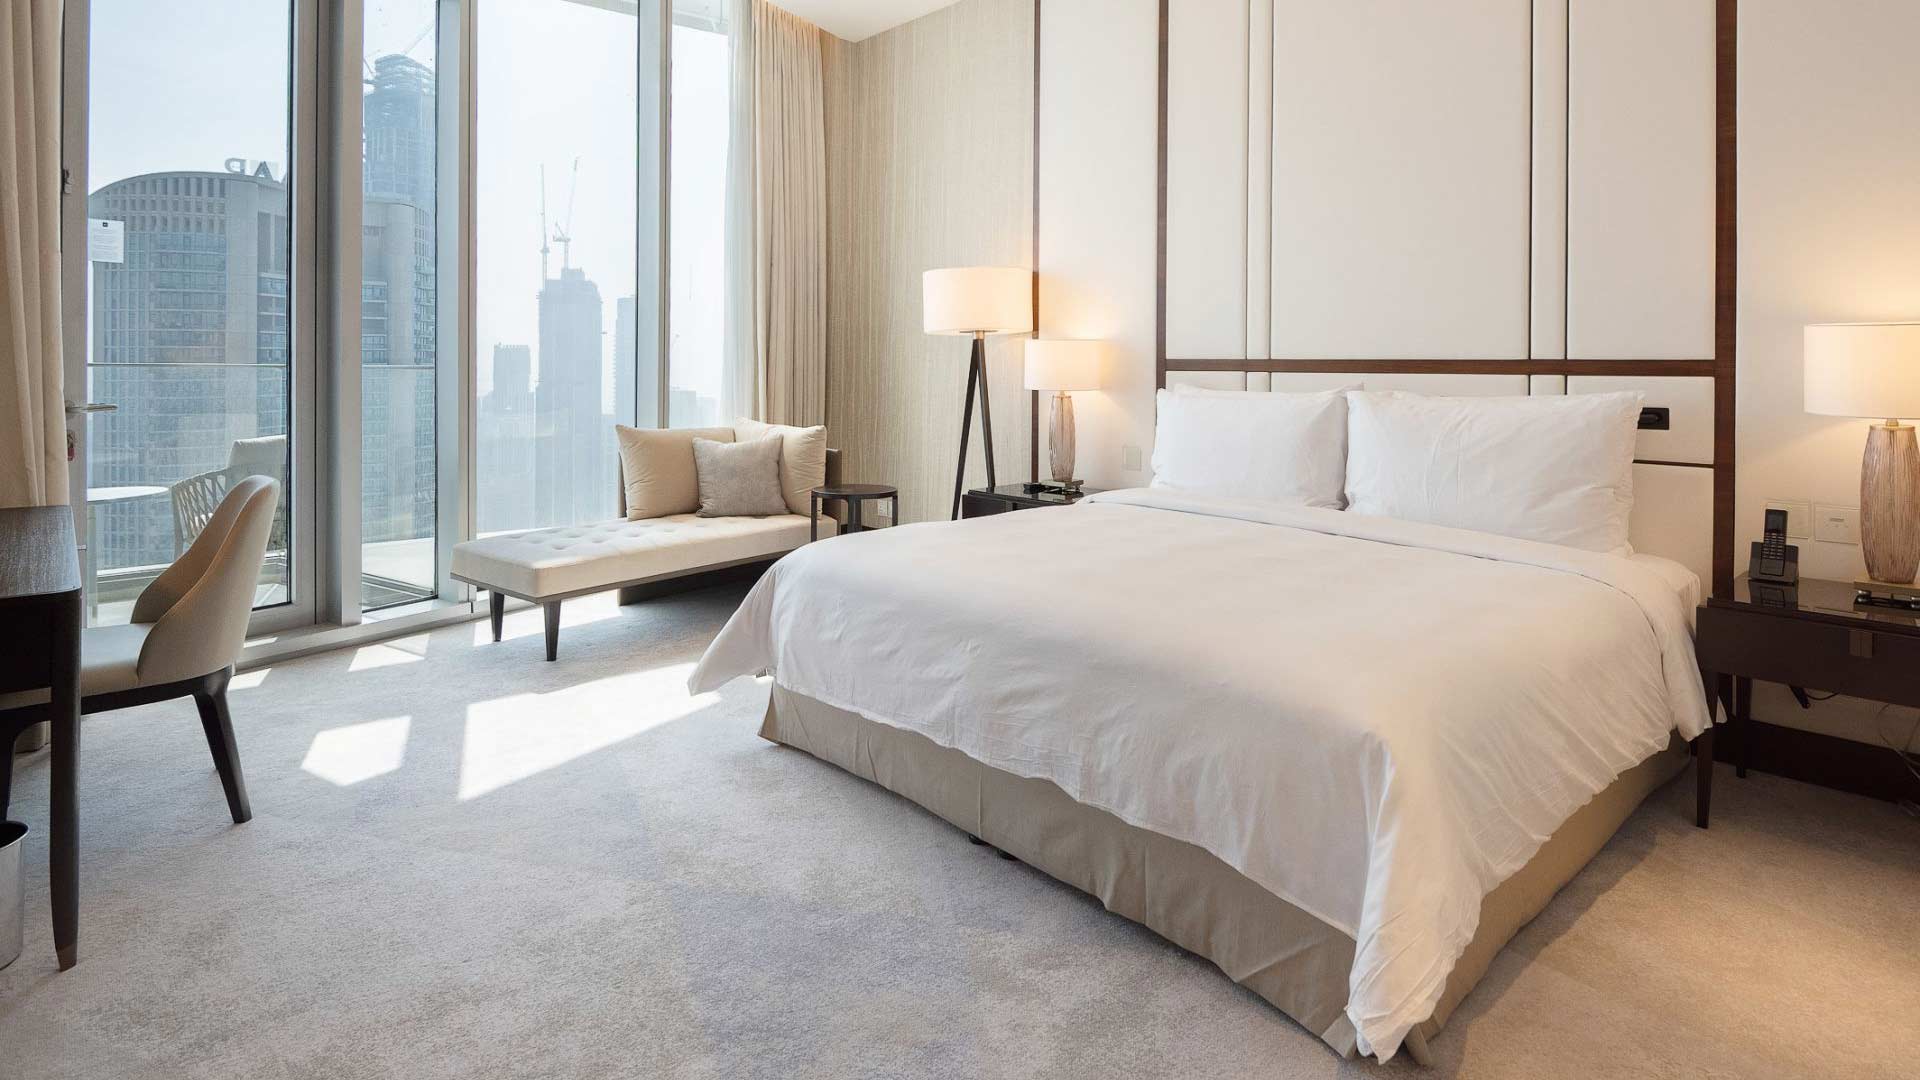 THE ADDRESS SKY VIEW TOWERS HOTEL APARTMENTS от Emaar Properties в Downtown Dubai, Dubai, ОАЭ1